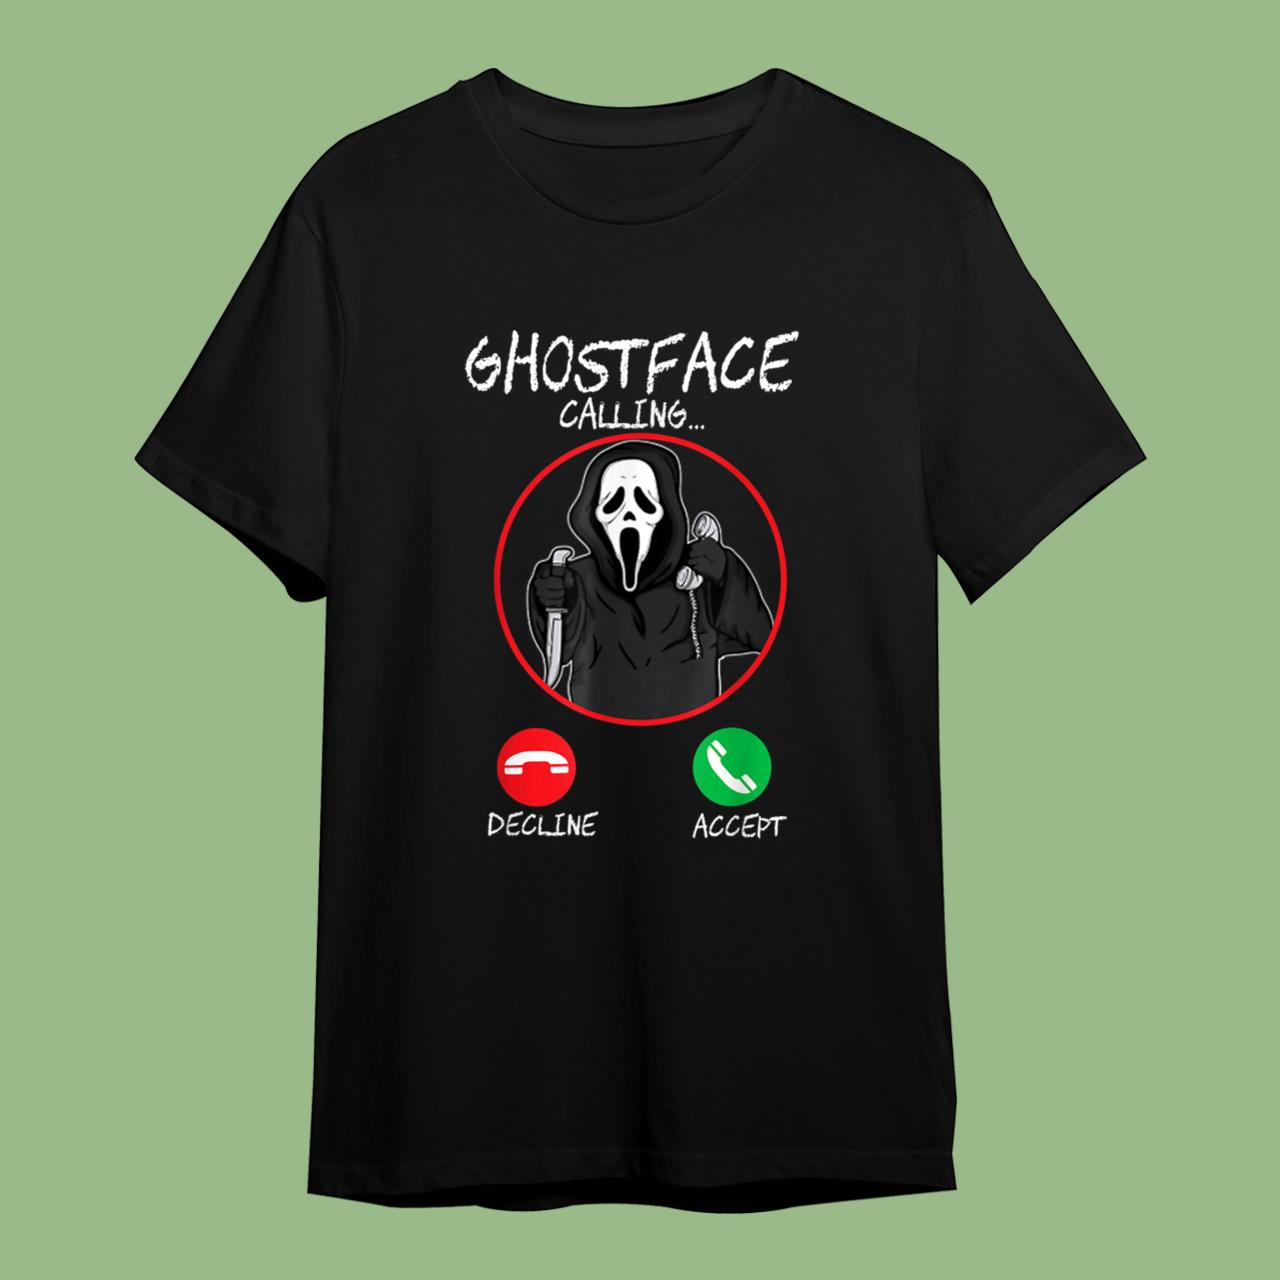 Skitongift Holiday Halloween Ghost Face Calling T-Shirt